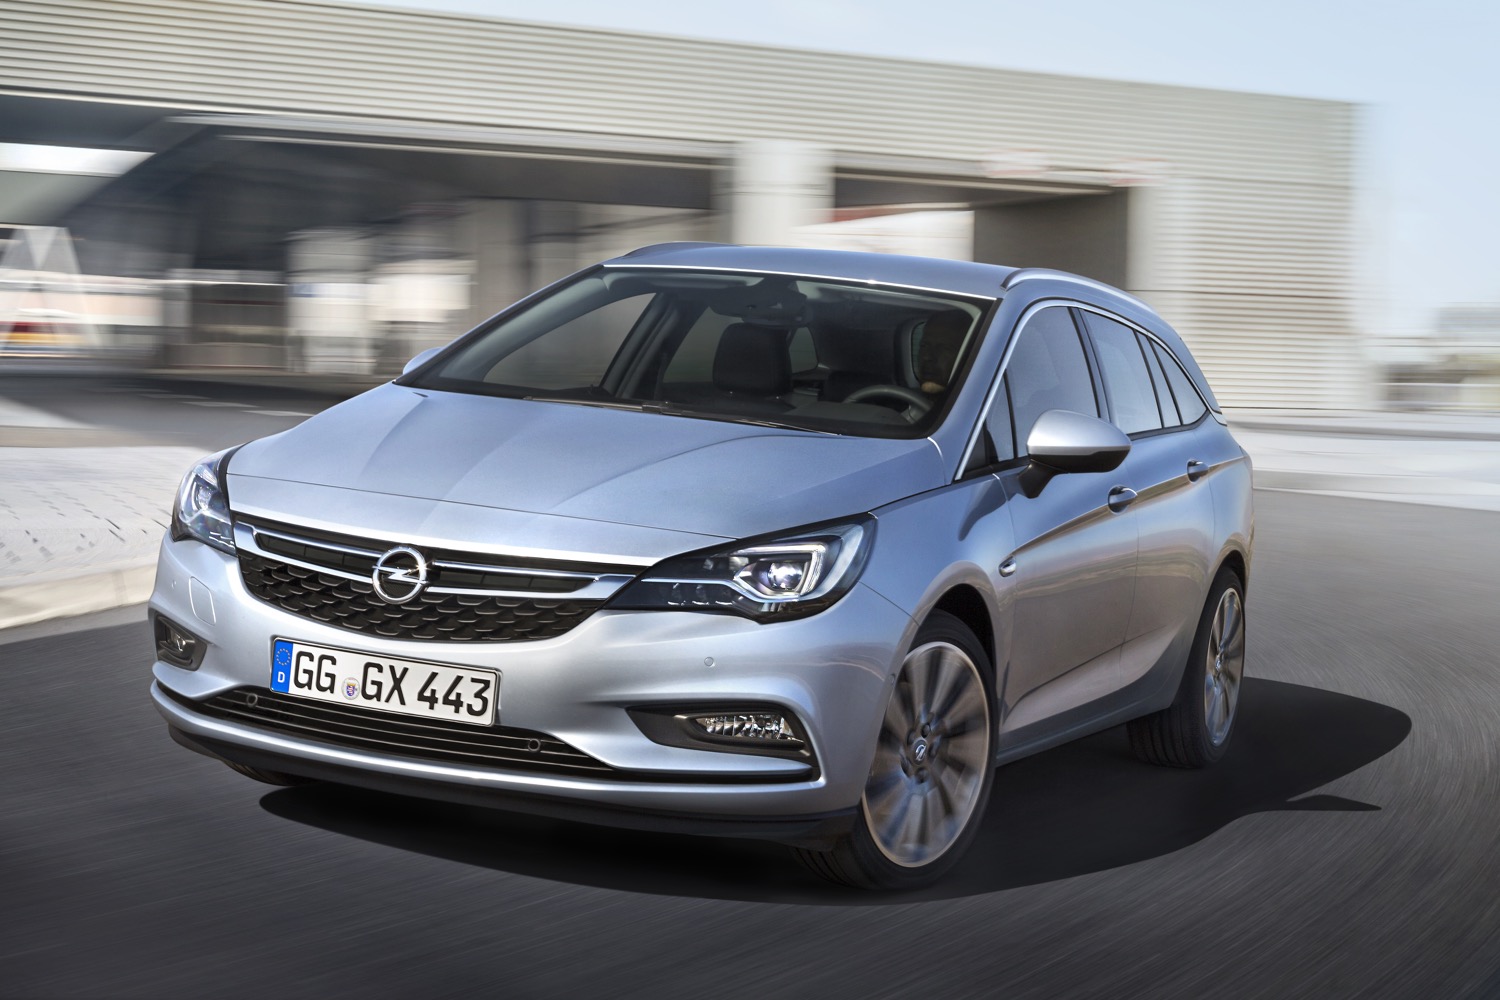 https://gmauthority.com/blog/wp-content/uploads/2015/09/2016-Opel-Astra-K-Sports-Tourer-01.jpg